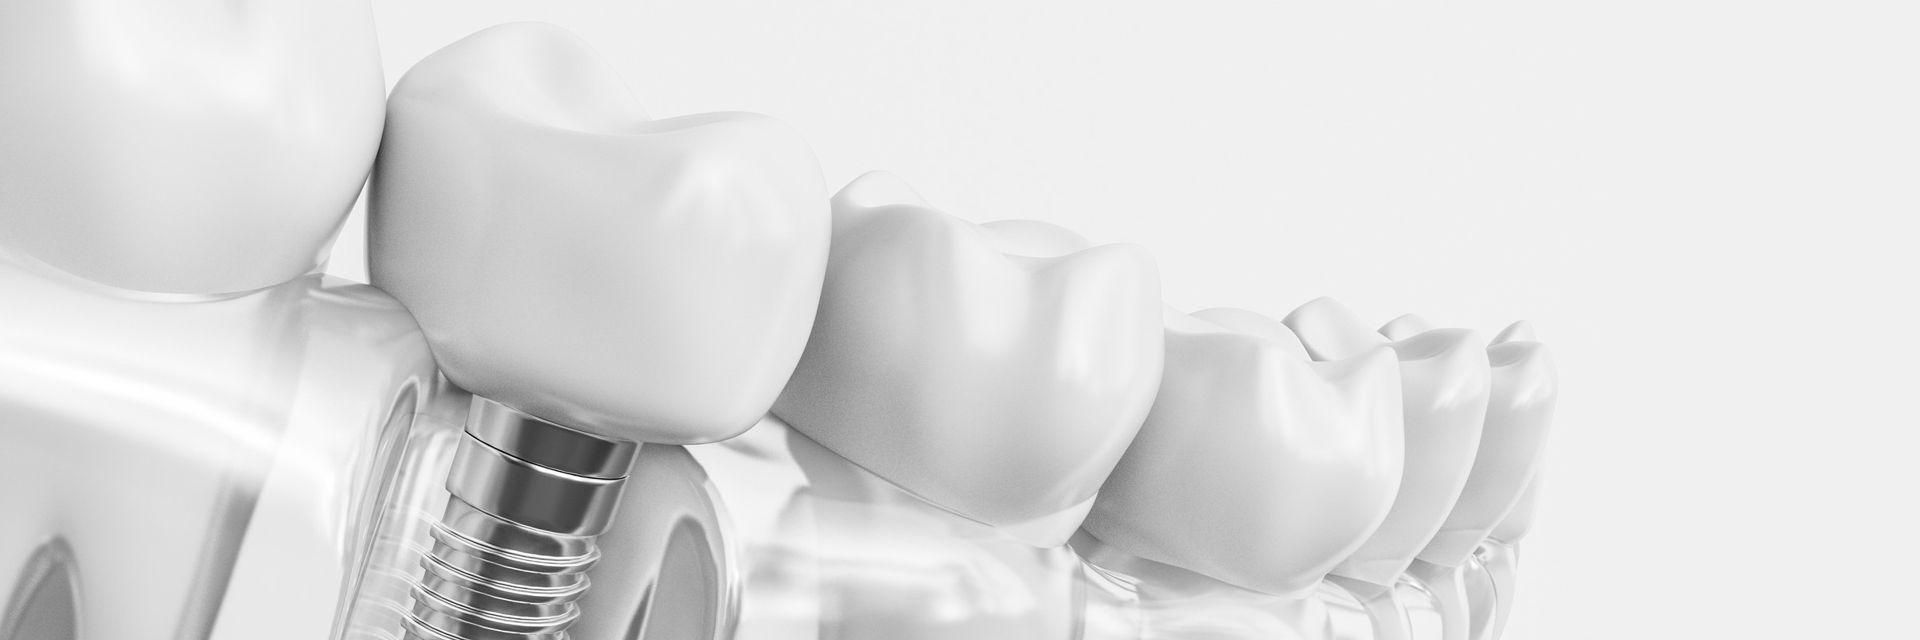 Implantology | smileDentity - specialists for dental implants